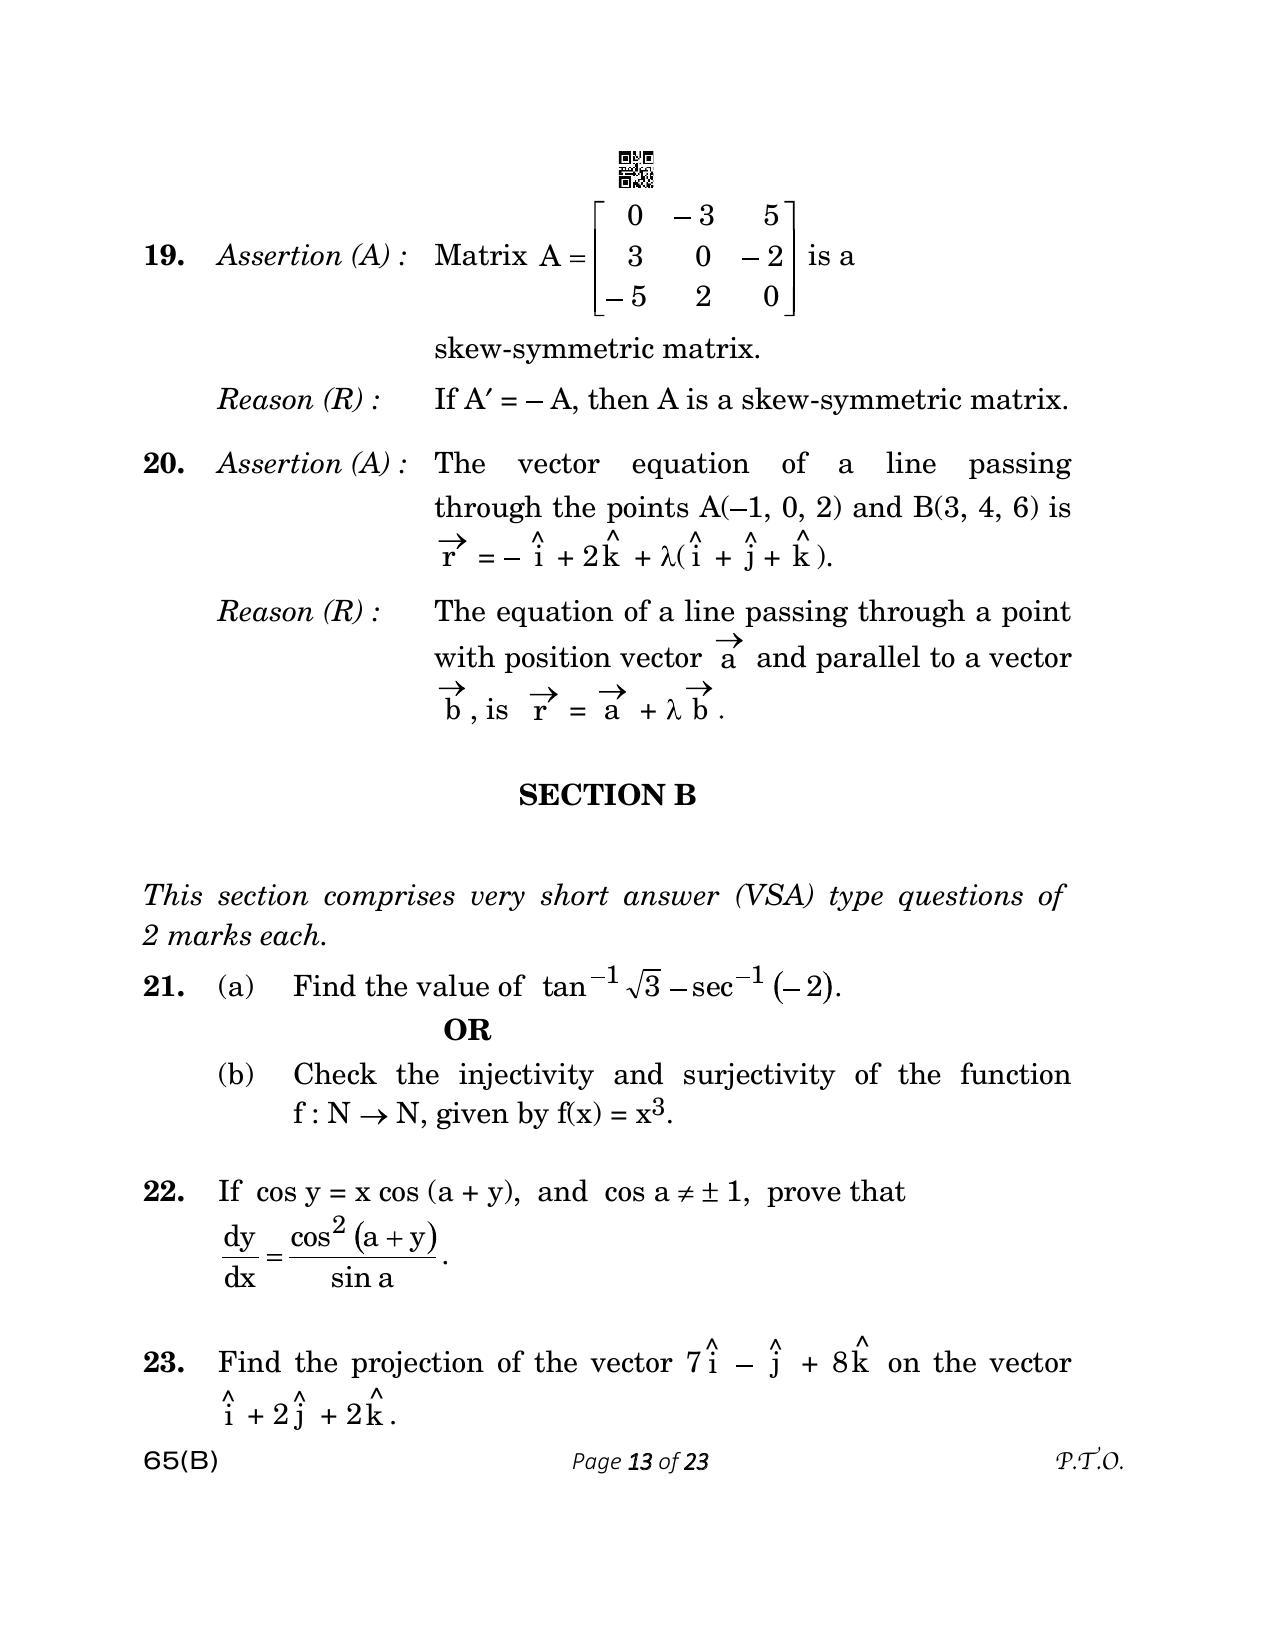 CBSE Class 12 65(B) MATHEMATICS FOR VI 2023 Question Paper - Page 13